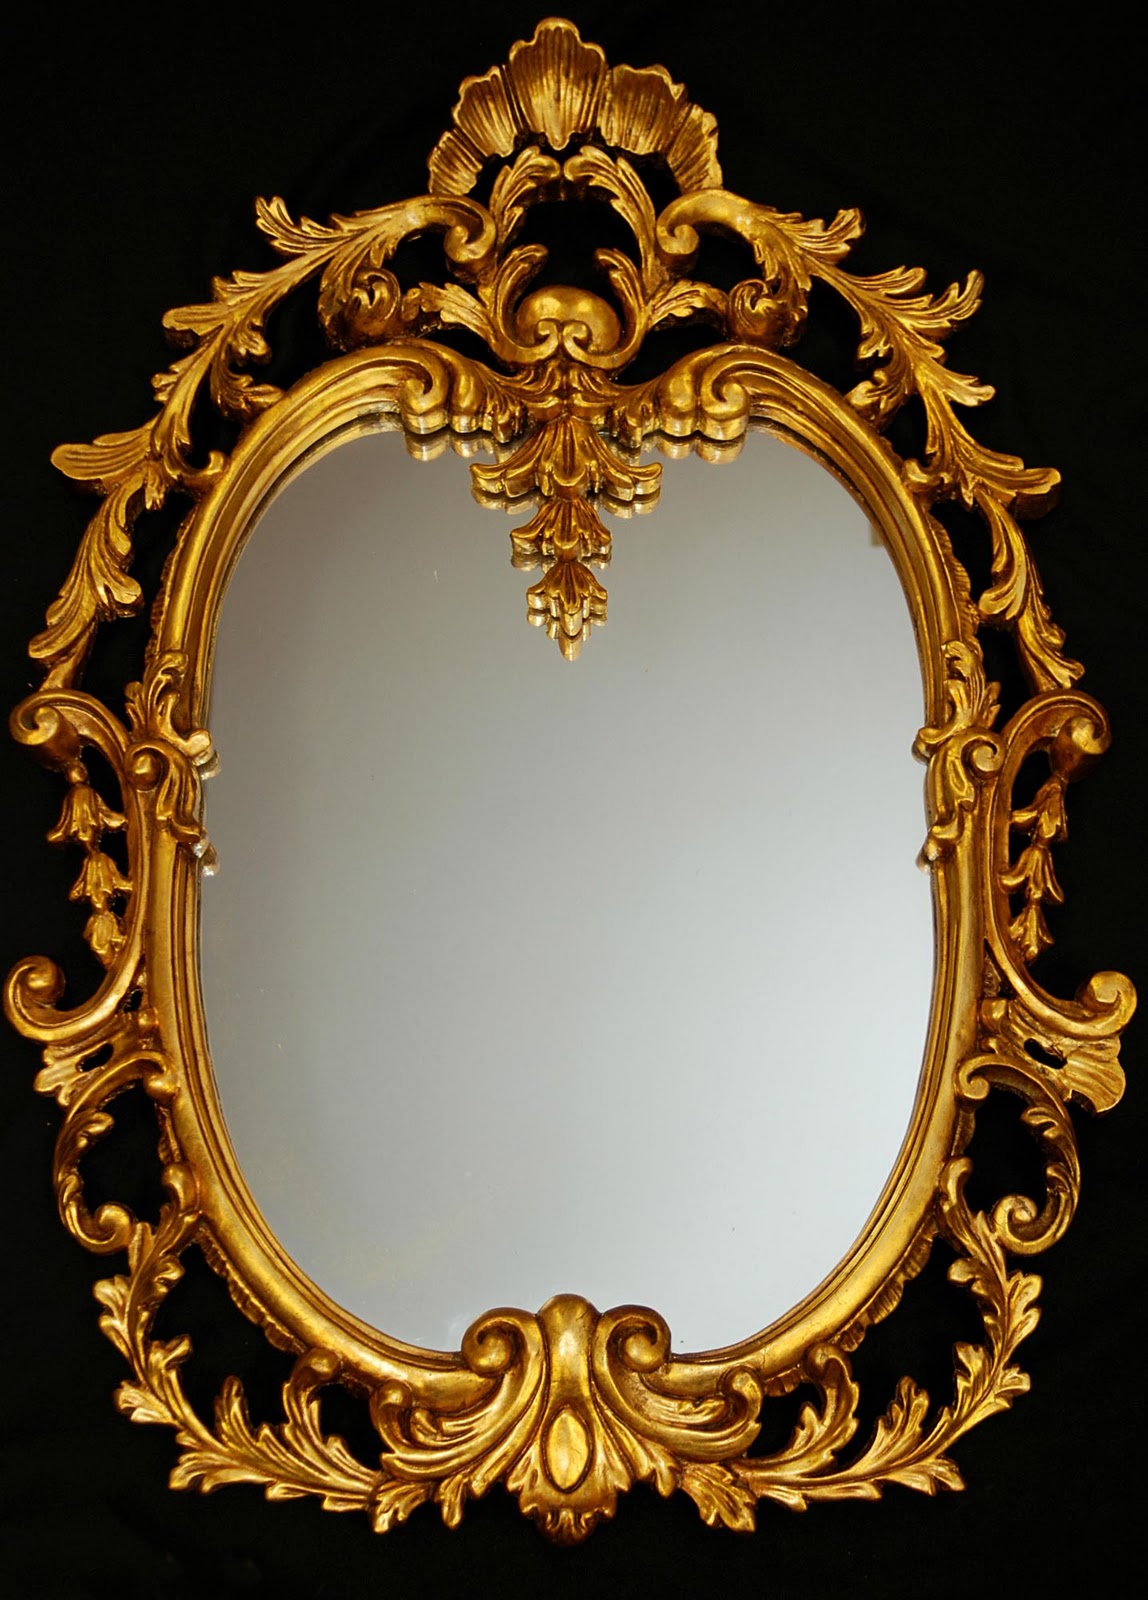 Nen\u00edtas garden: Beautiful mirrors aka fallegir speglar :o